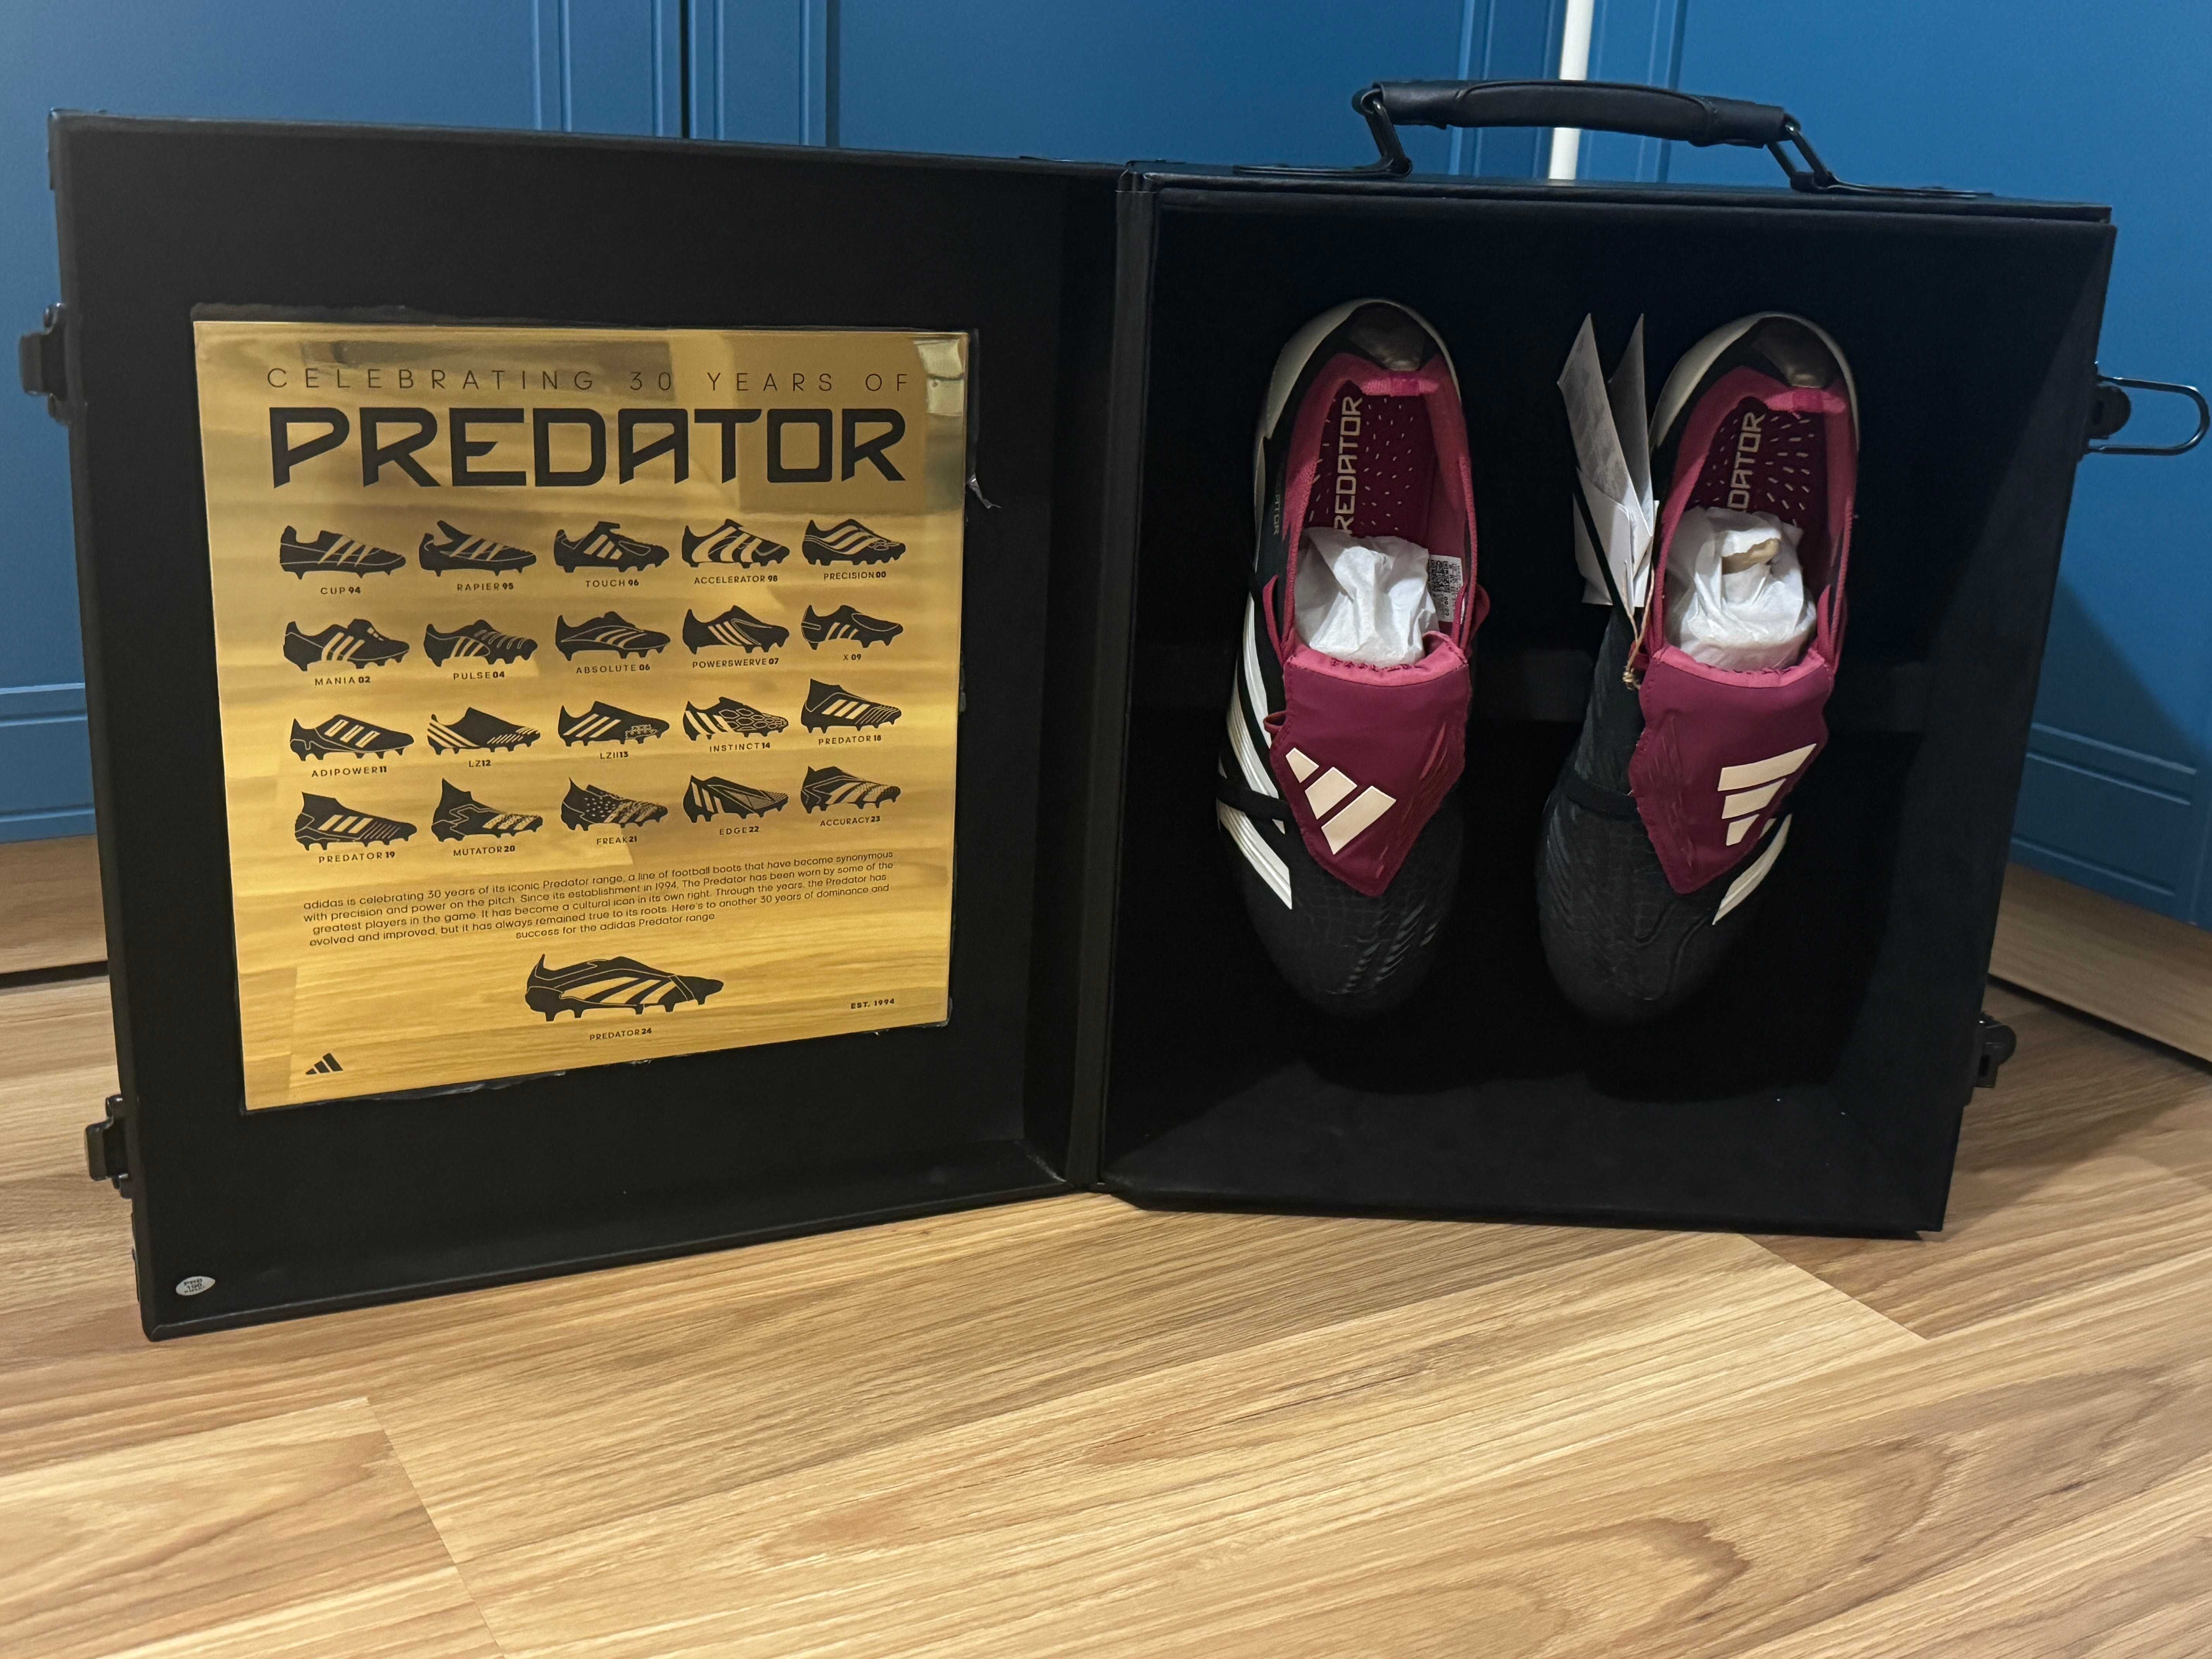 Adidas Predator 30 Elite FG 42 2/3 limited edition 2024